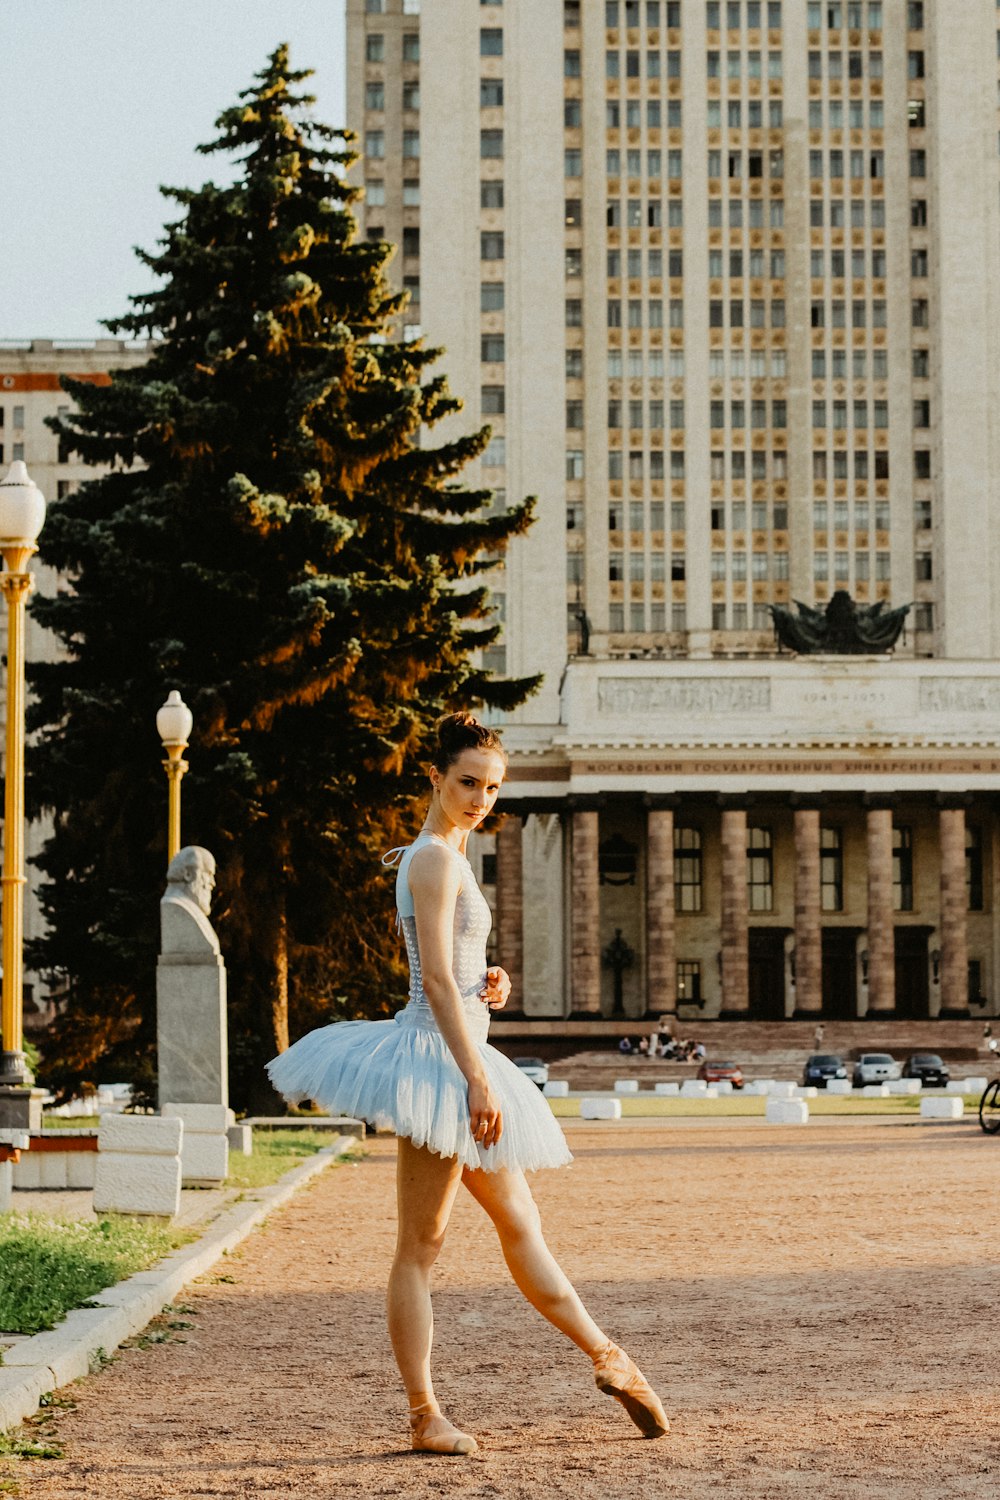 ballerina standing on pathway near buildings